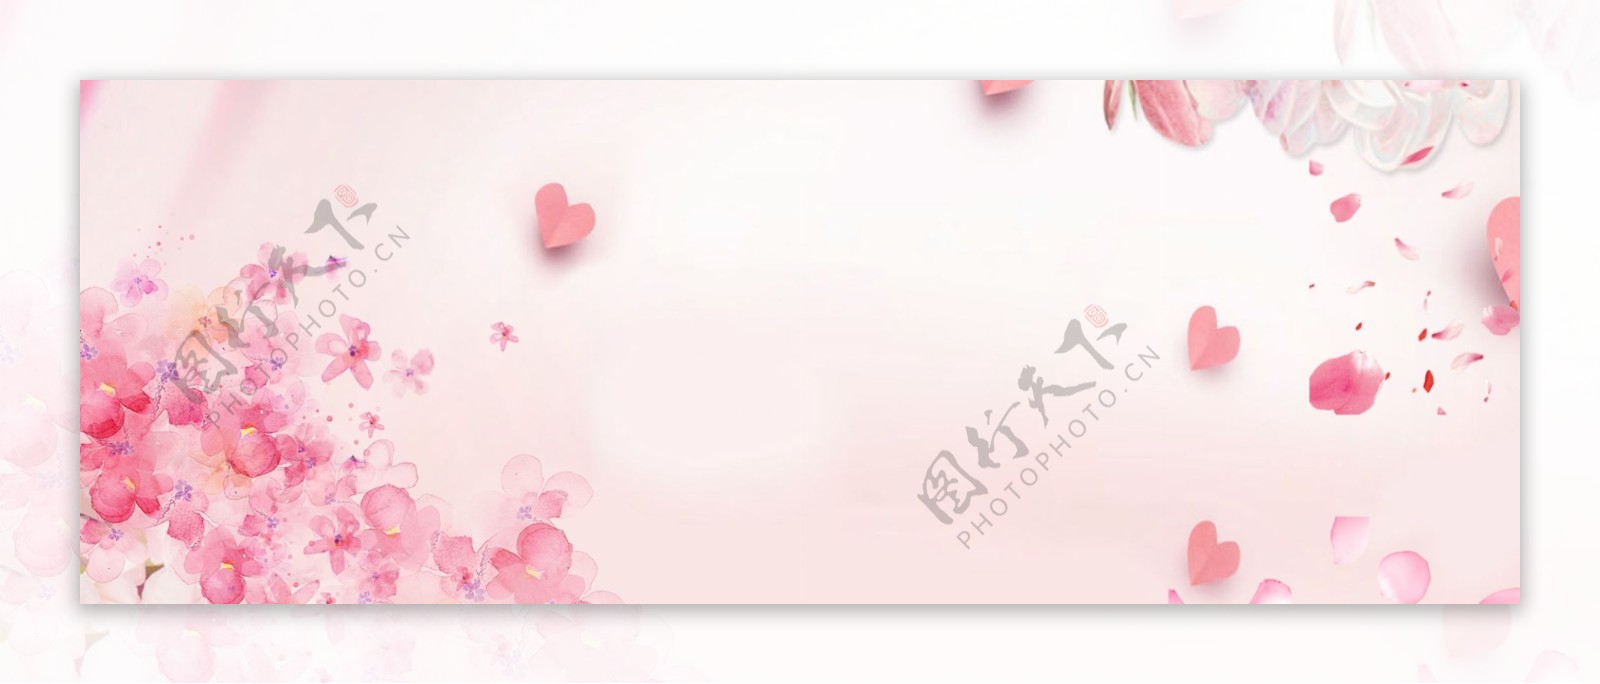 三八妇女节浪漫梦幻粉色banner